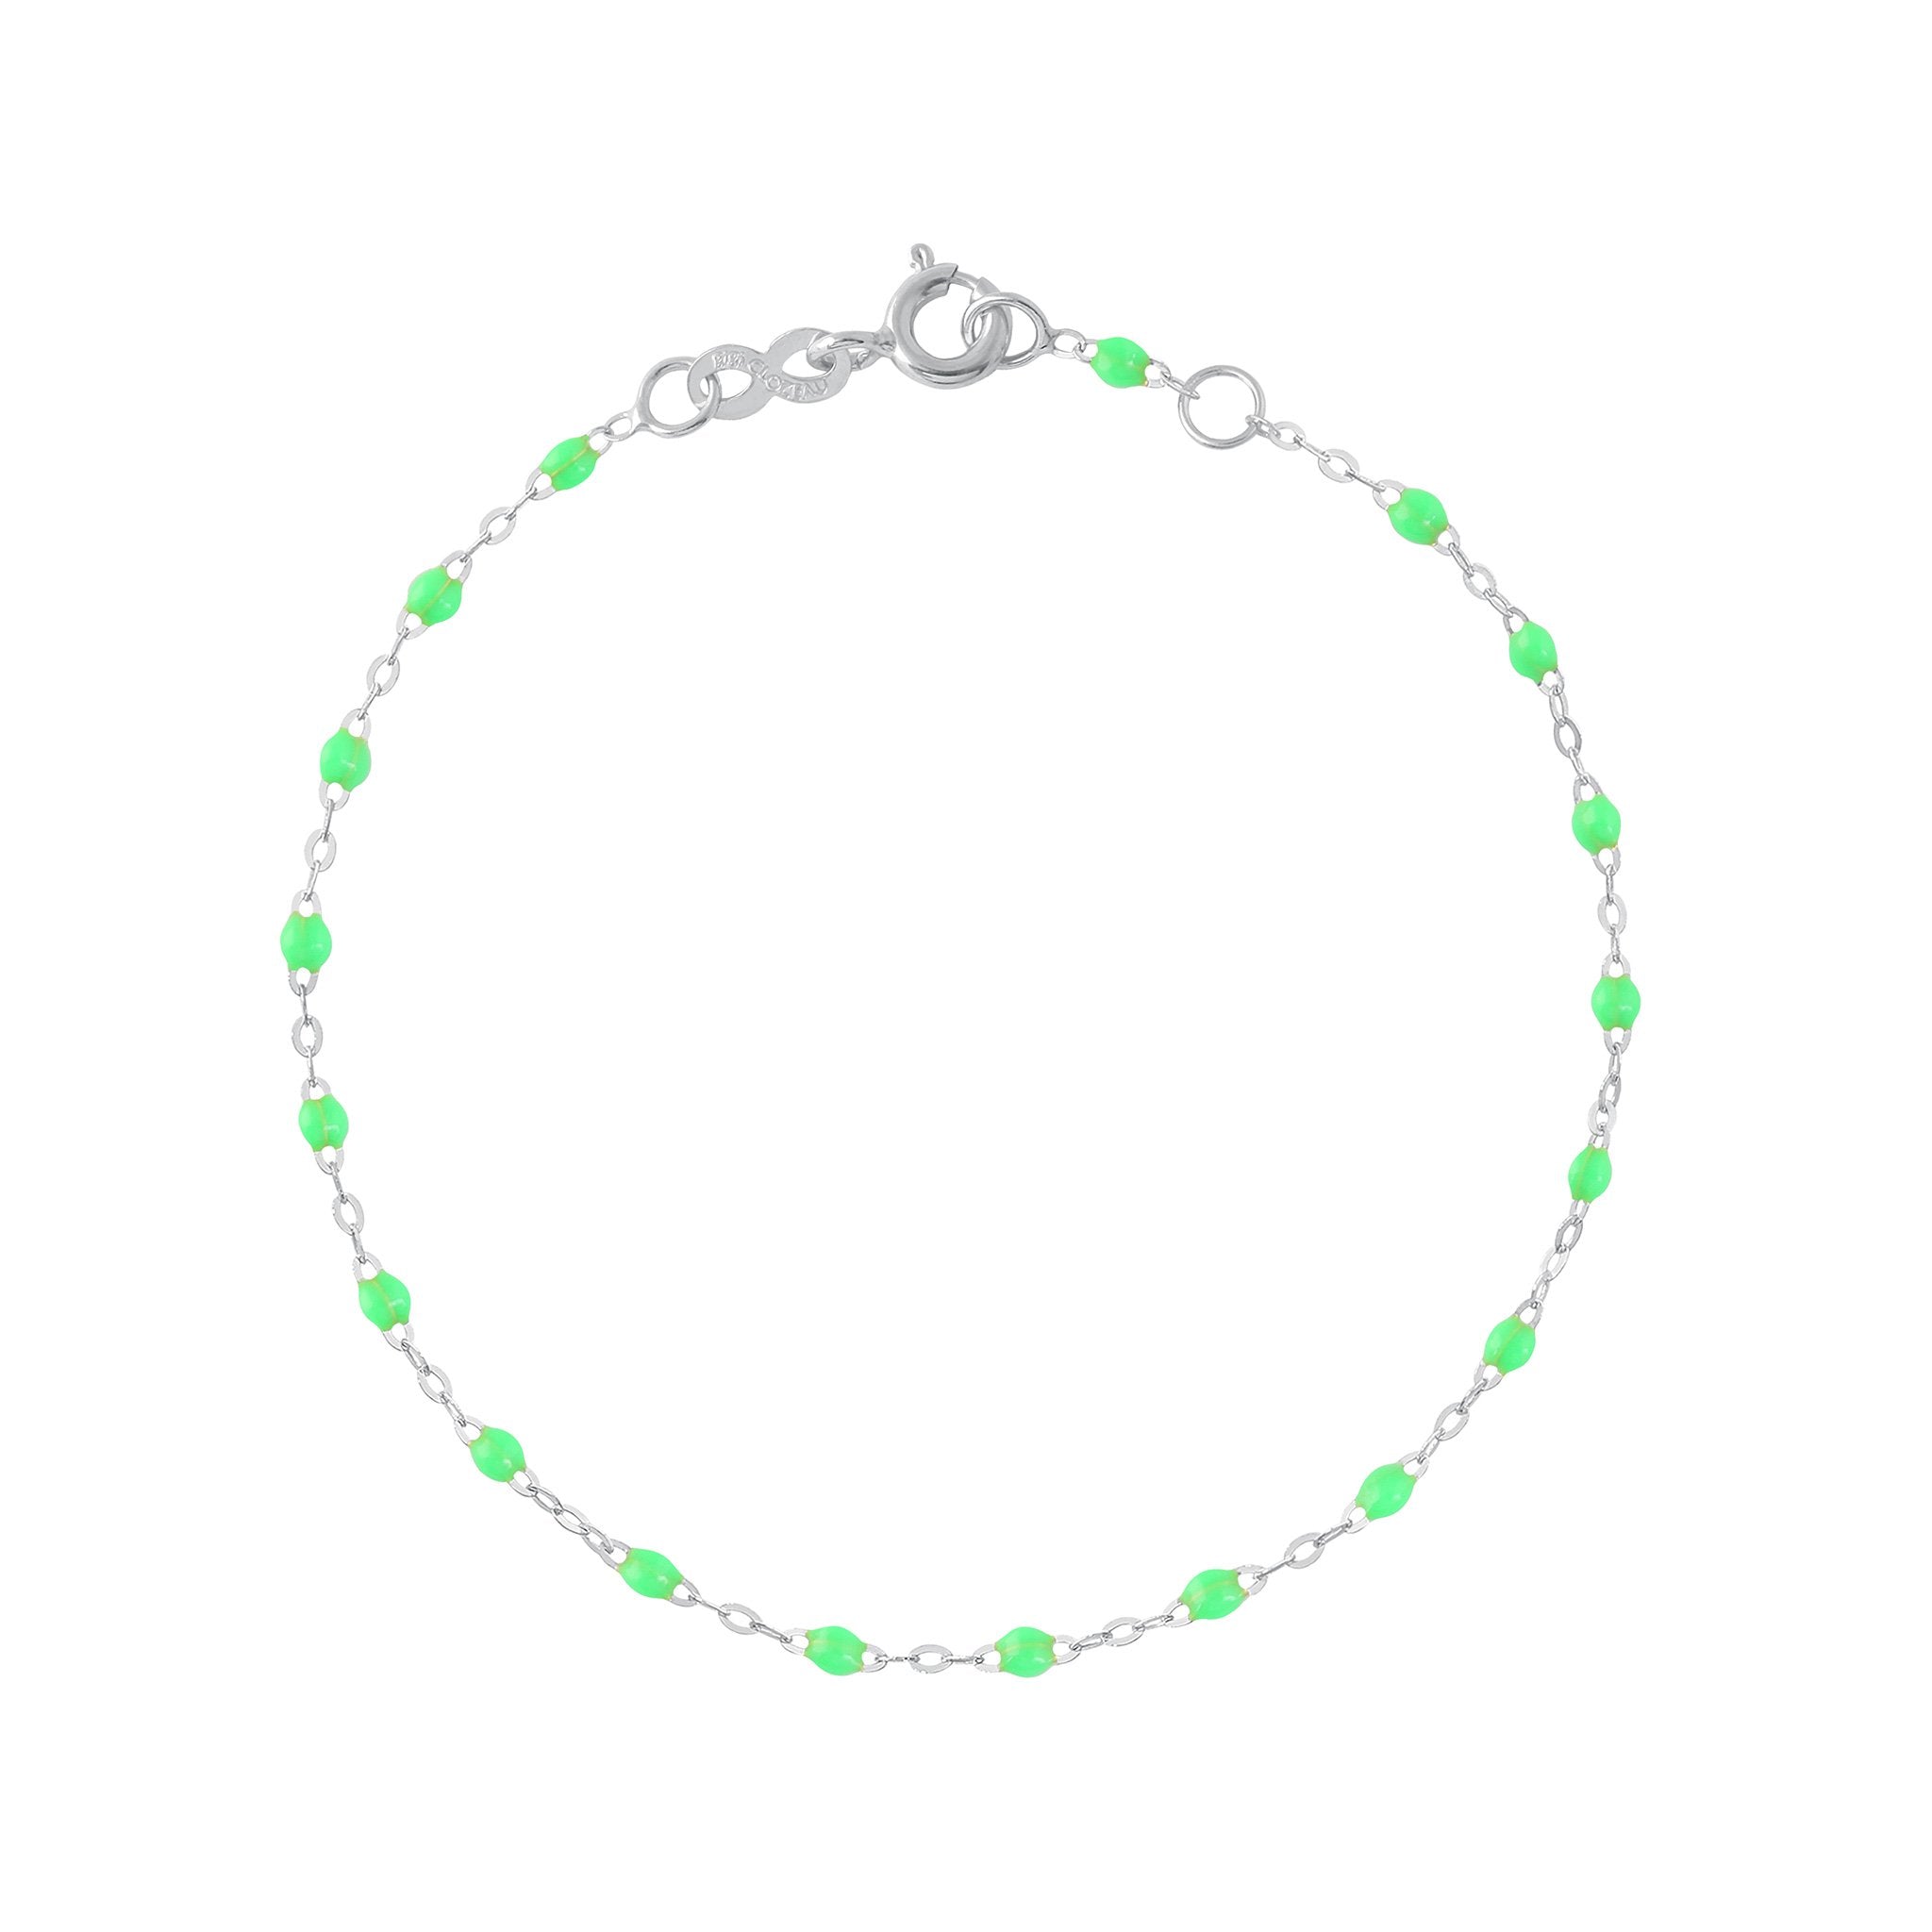 Bracelet vert fluo Classique Gigi, or blanc, 17 cm classique gigi Référence :  b3gi001g3617xx -1